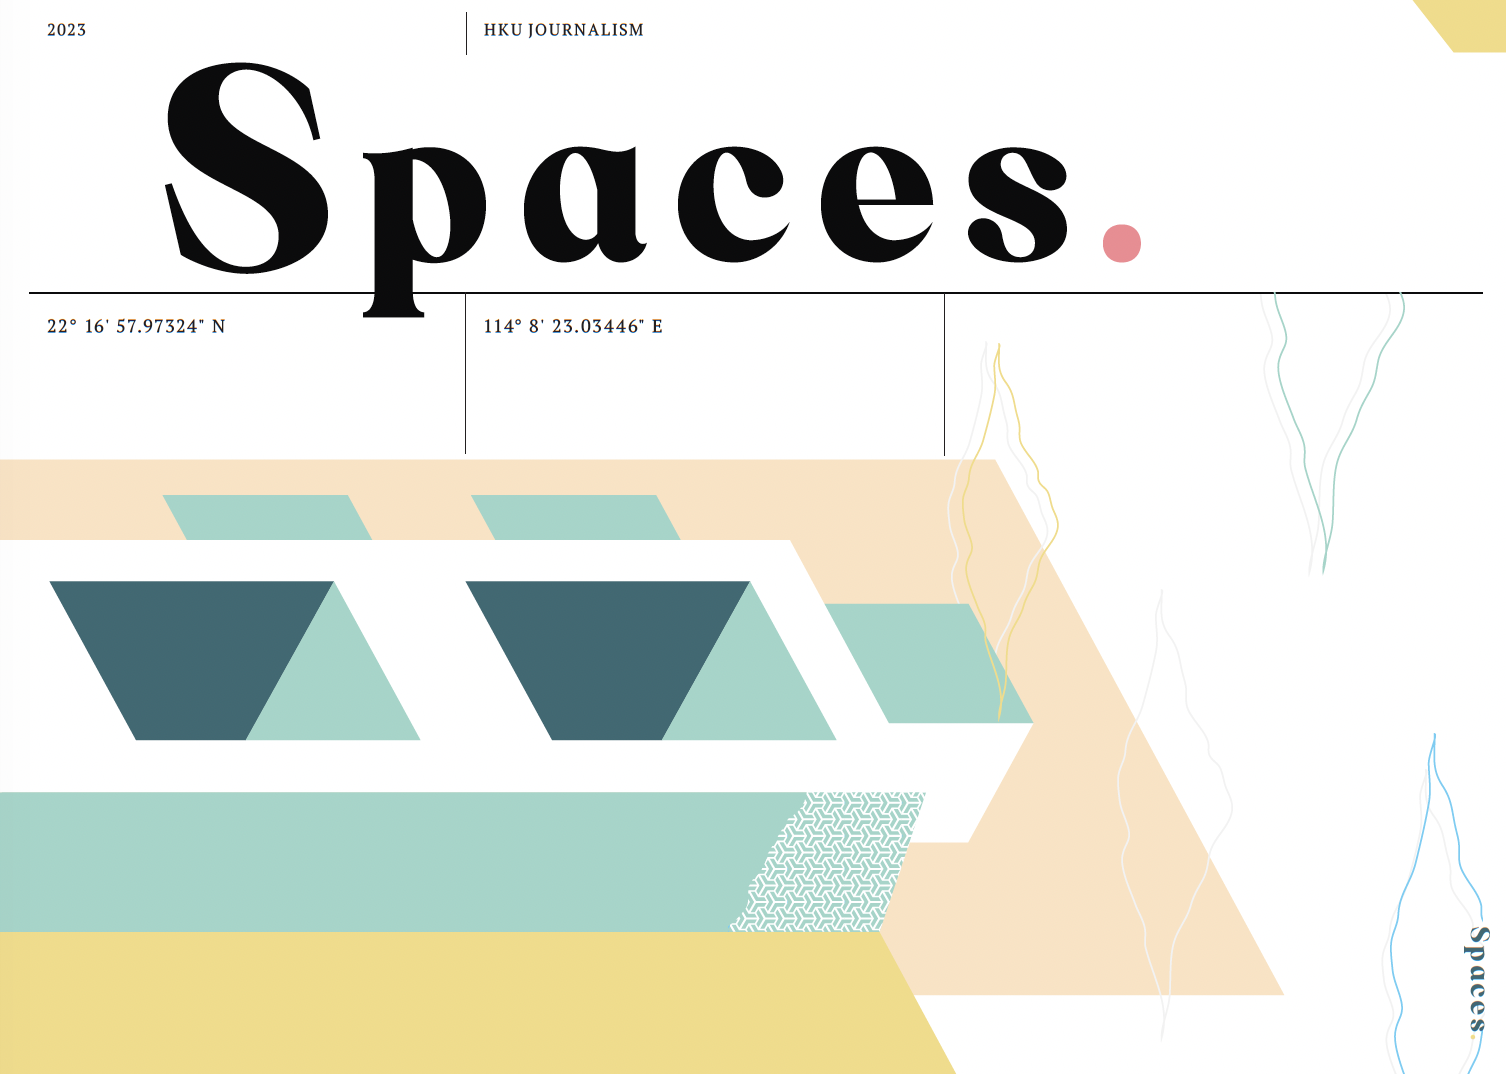 Spaces magazine